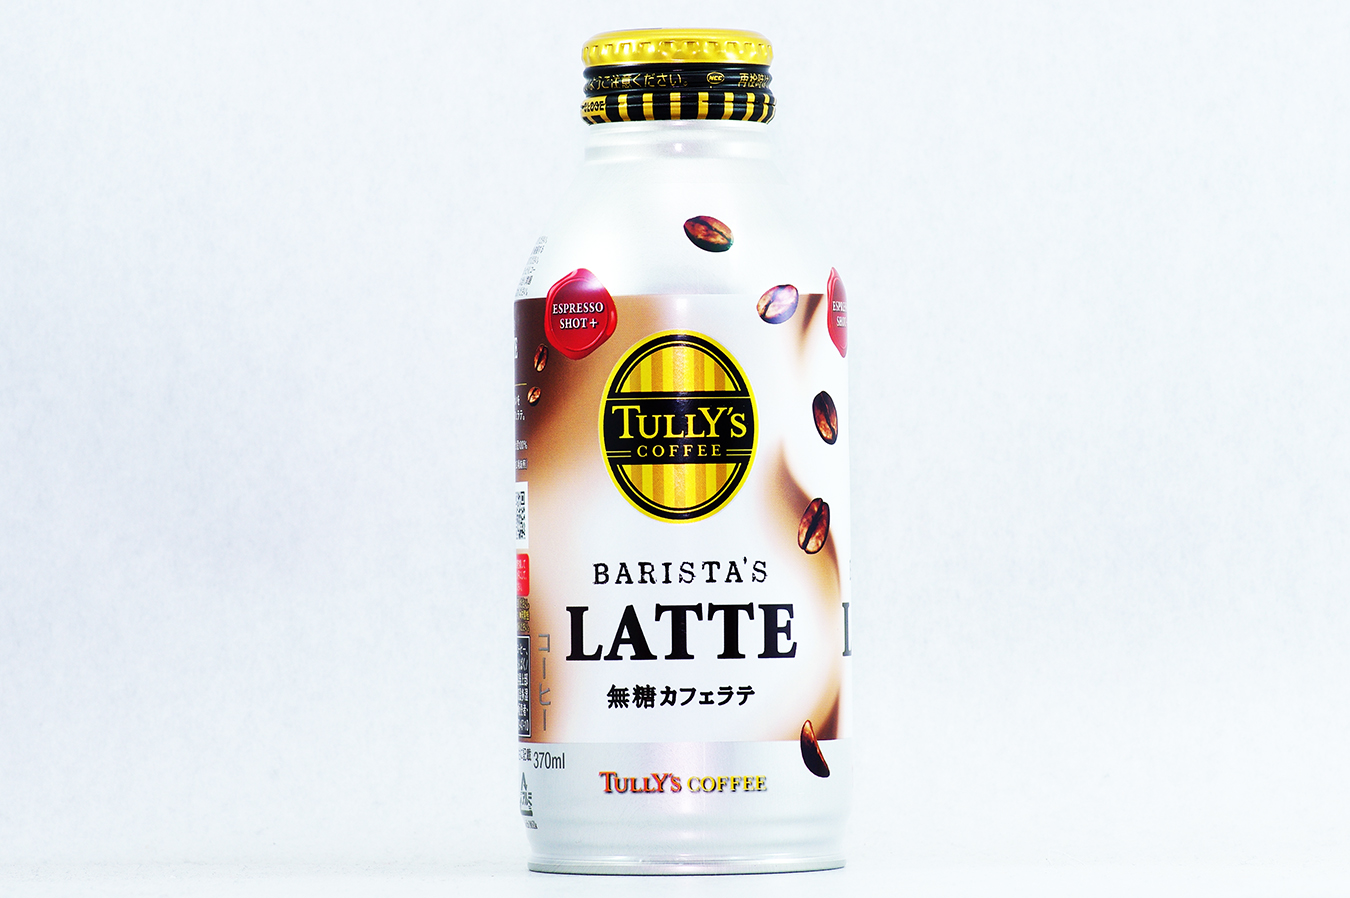 TULLY'S COFFEE BARISTA'S LATTE 2017年4月